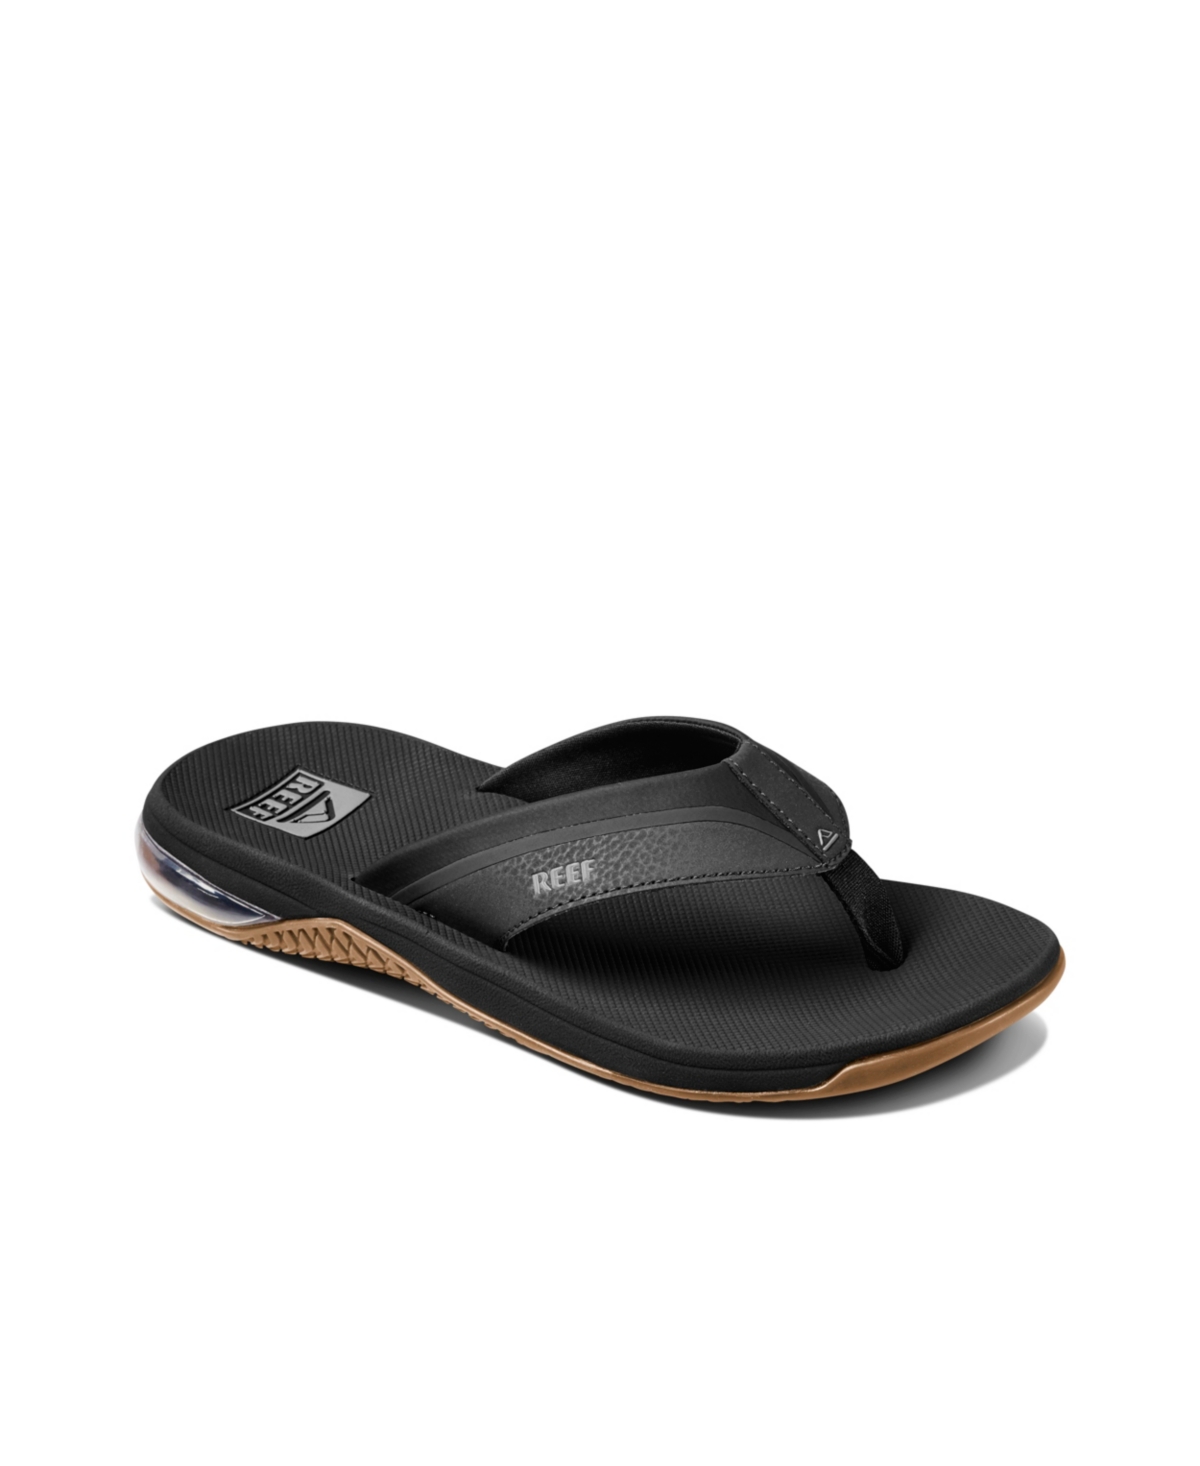 Men's Anchor Comfort Fit Sandals - Black, Silver